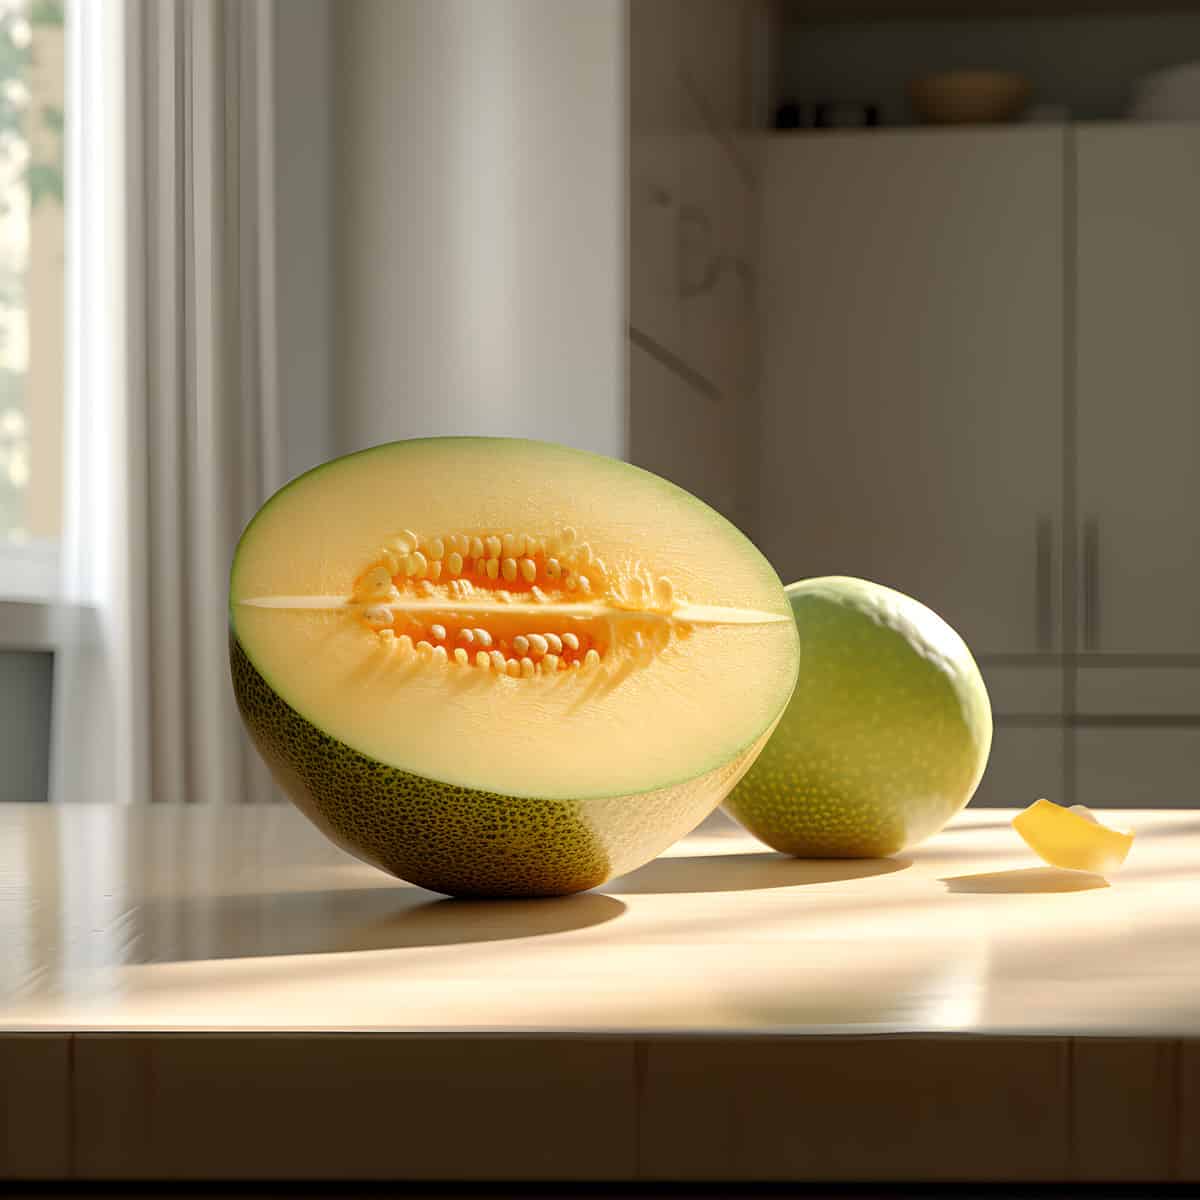 Honeydew Melon on a kitchen counter